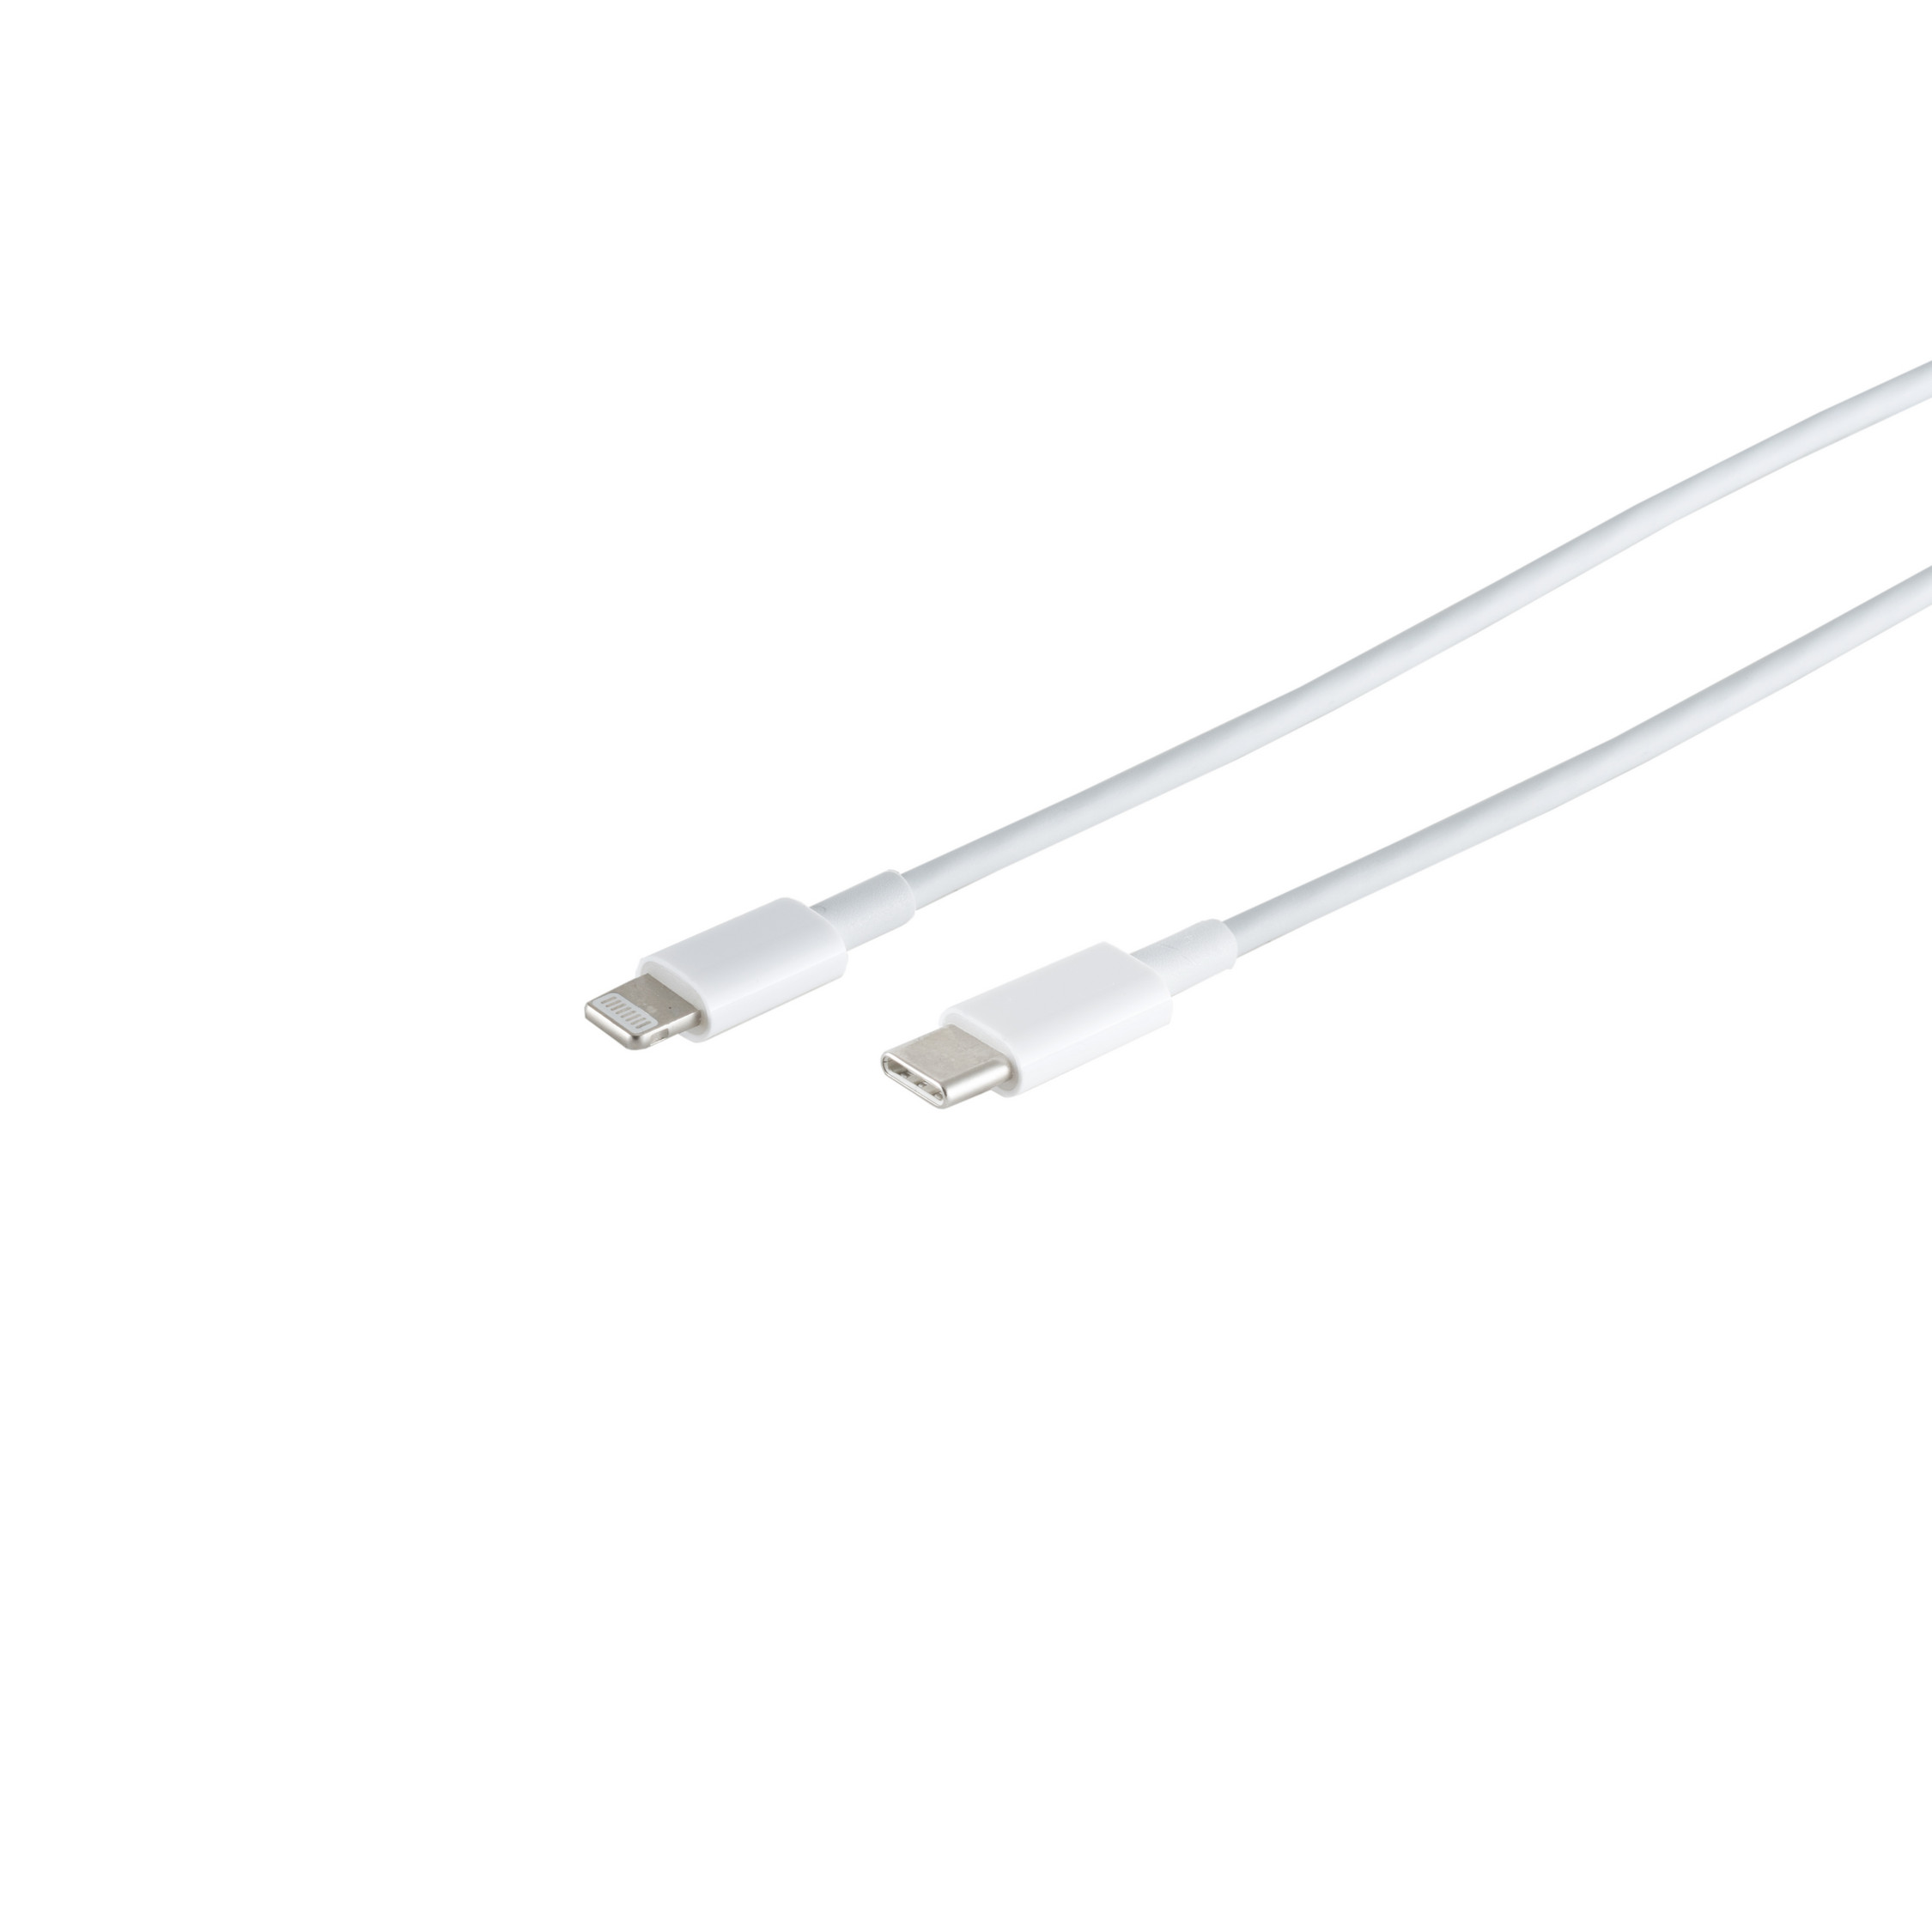 S/CONN MAXIMUM CONNECTIVITY USB Stecker auf Lade USB-C® Kabel, Kabel Stecker, USB 8-pin